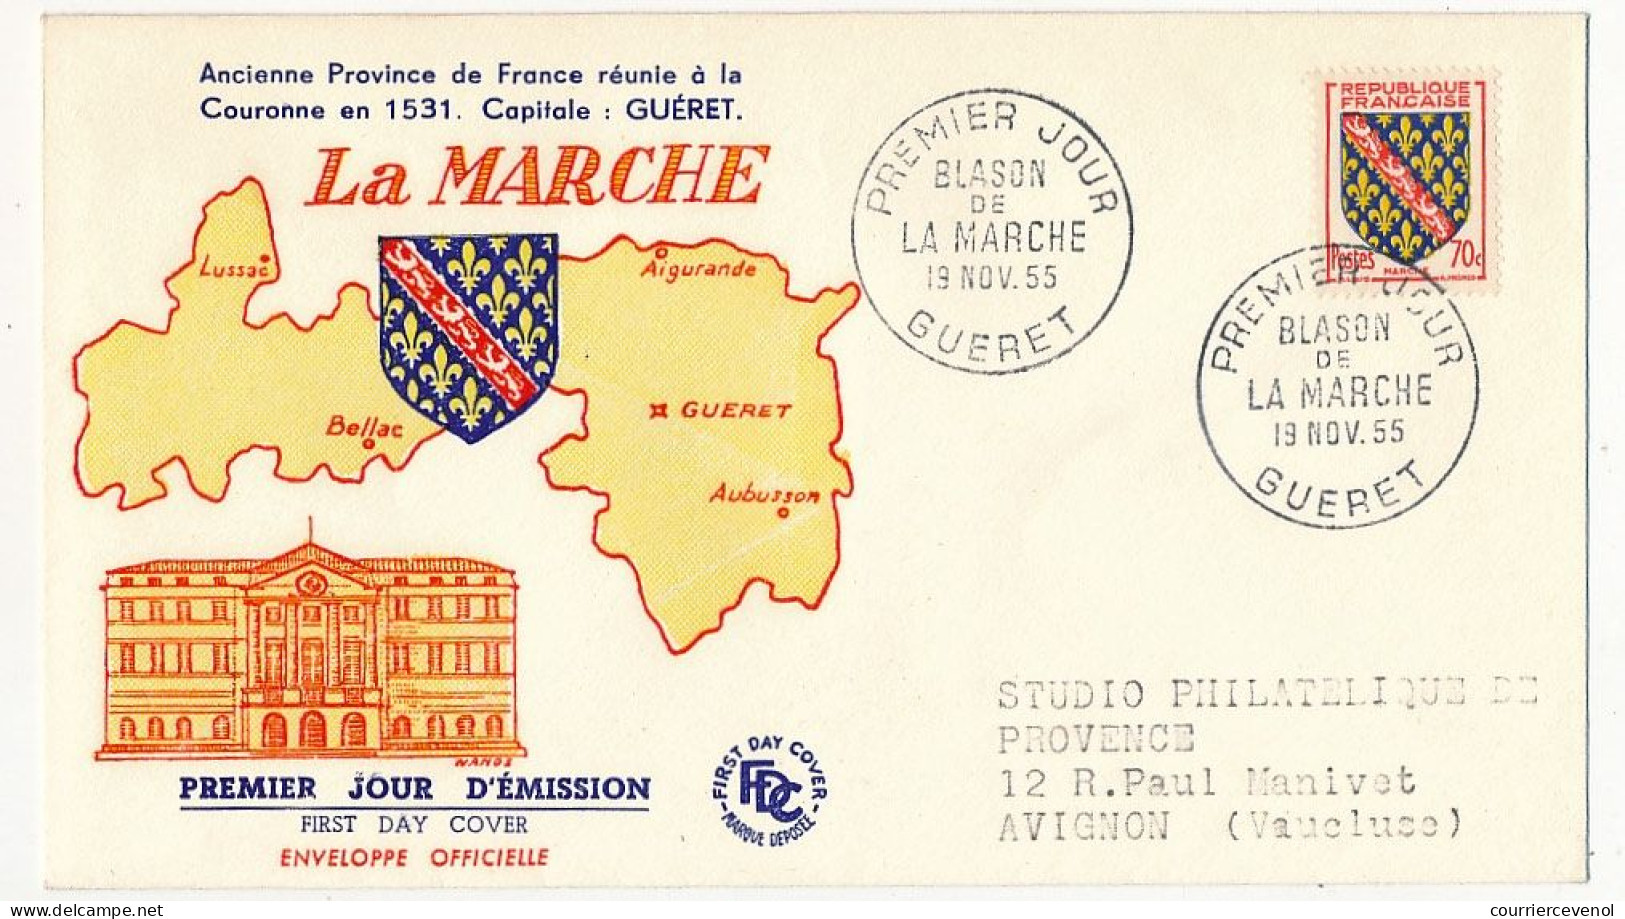 FRANCE - Env. FDC - 70c Blason De La Marche - GUERET - 19 Novembre 1955 - 1950-1959